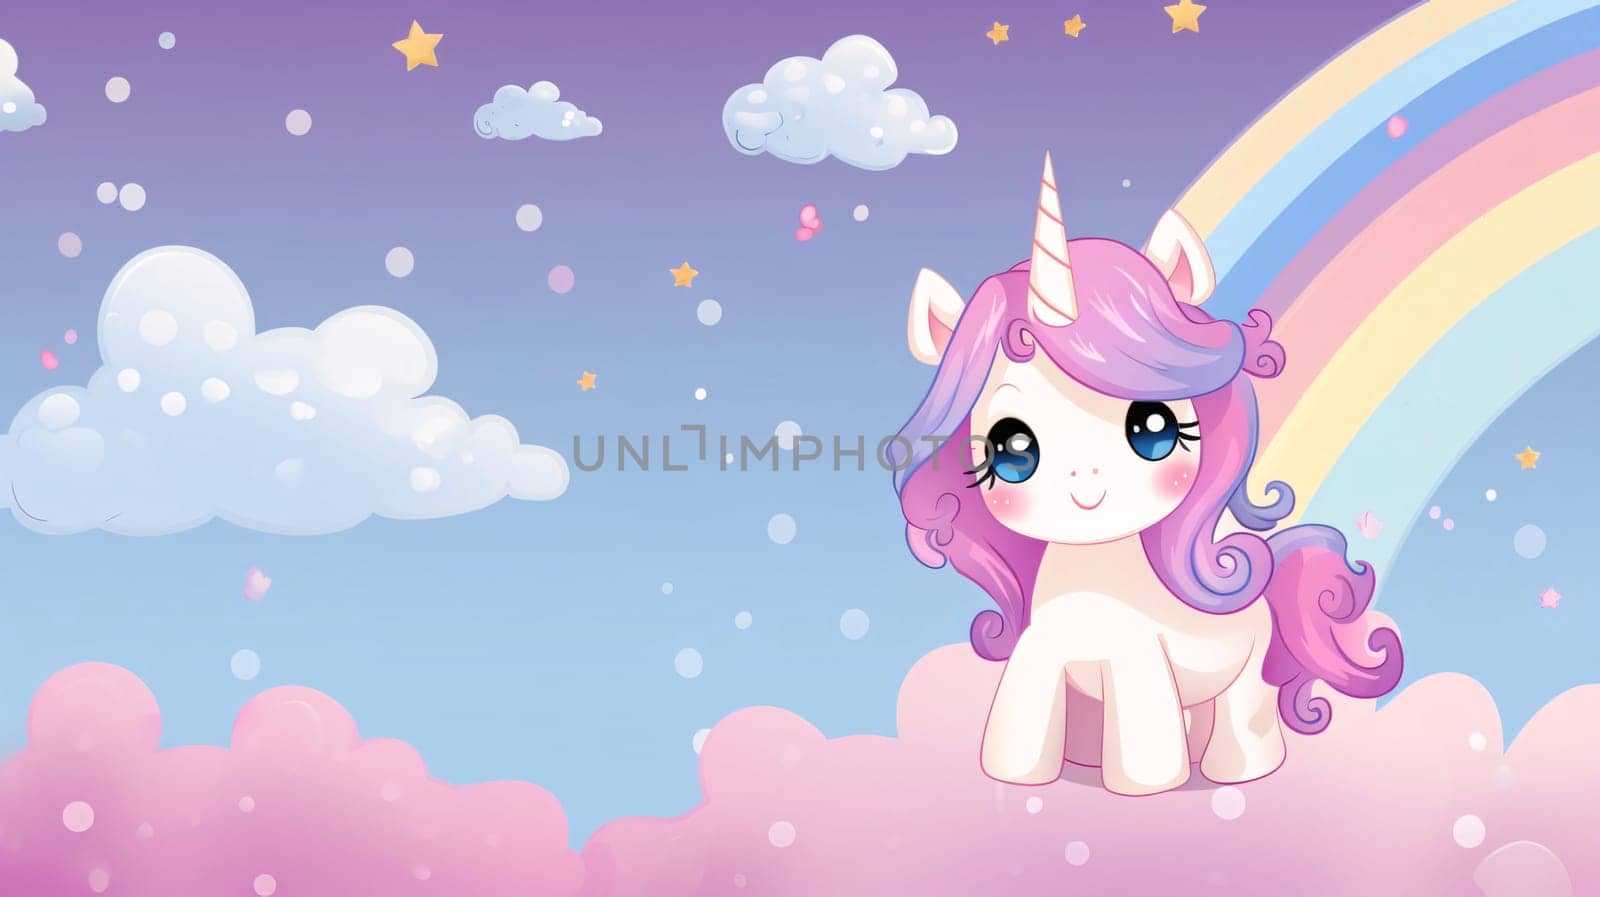 Cute unicorn with rainbow in the sky. Vector cartoon illustration. by ThemesS